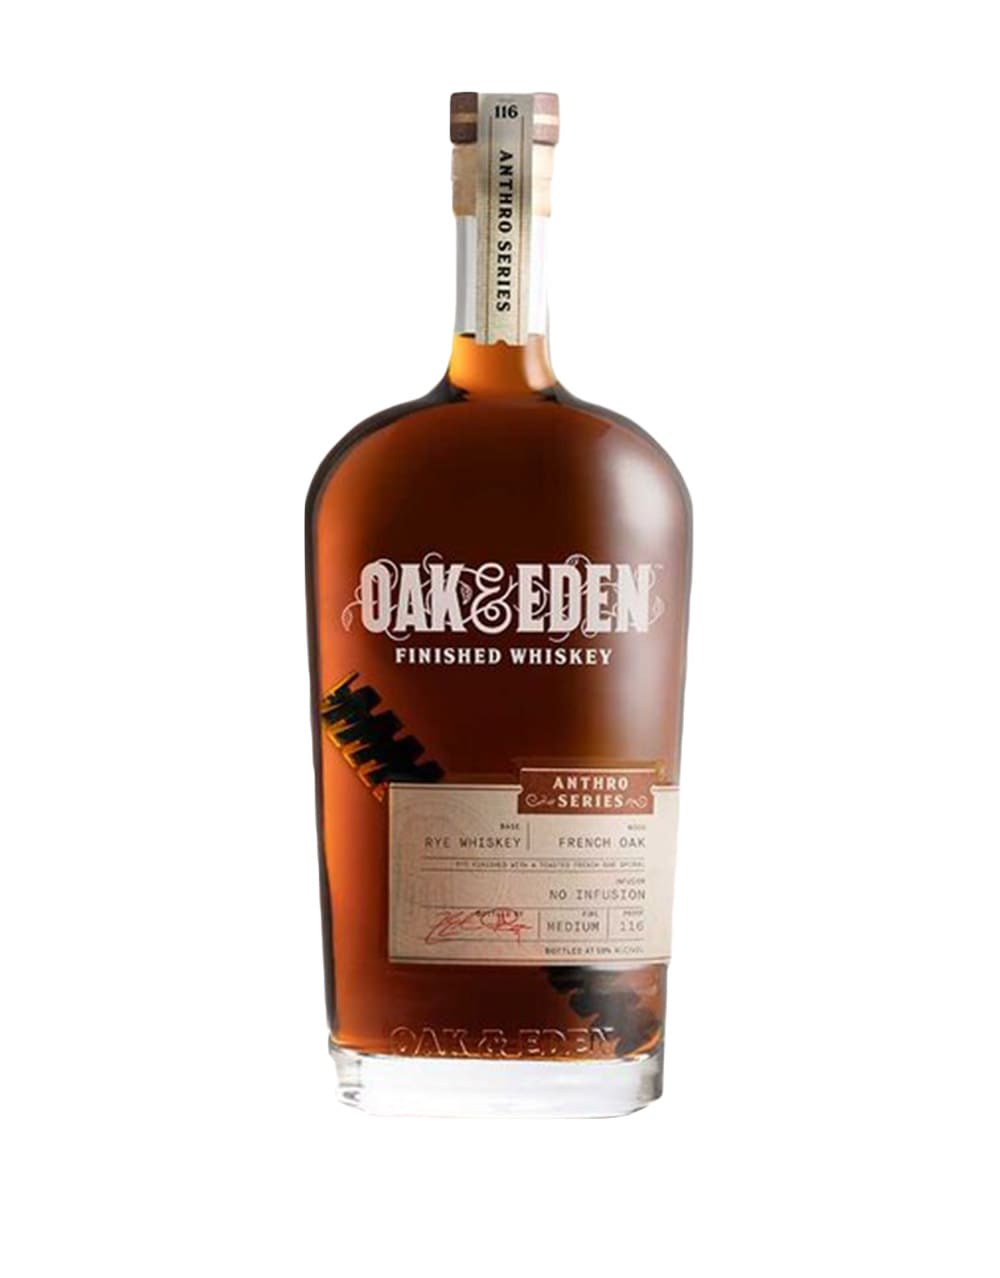 Oak & Eden Finished Whiskey Anthro Series Jamestown Revival Round Prairie Rye